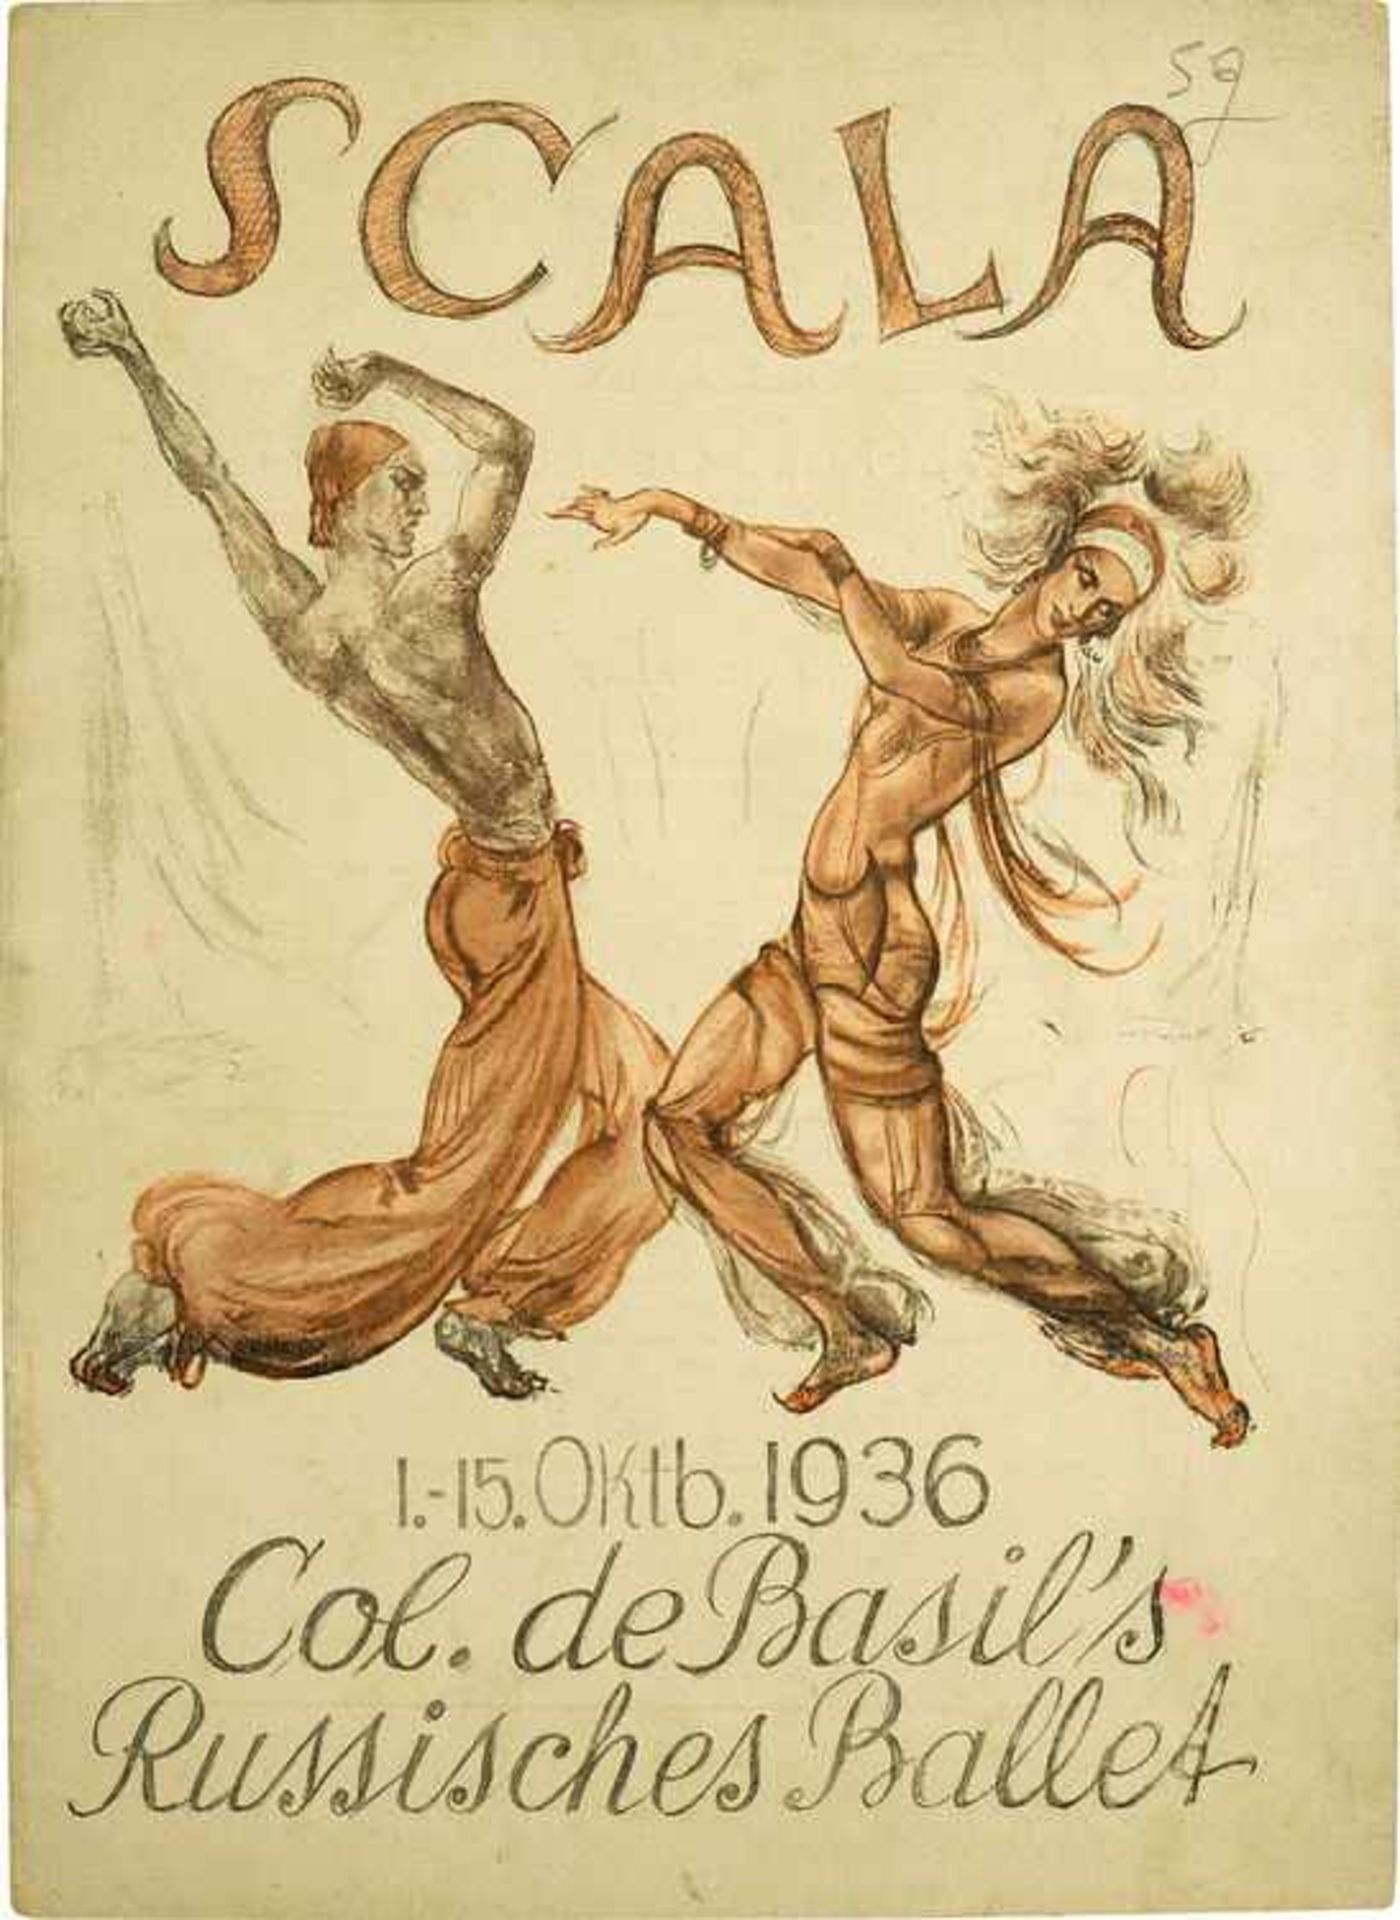 [BALLETS RUSSES] Colonel W. de Basils Russisches Ballett in Berlin, 1.-15.10.1936: u.a. “Le